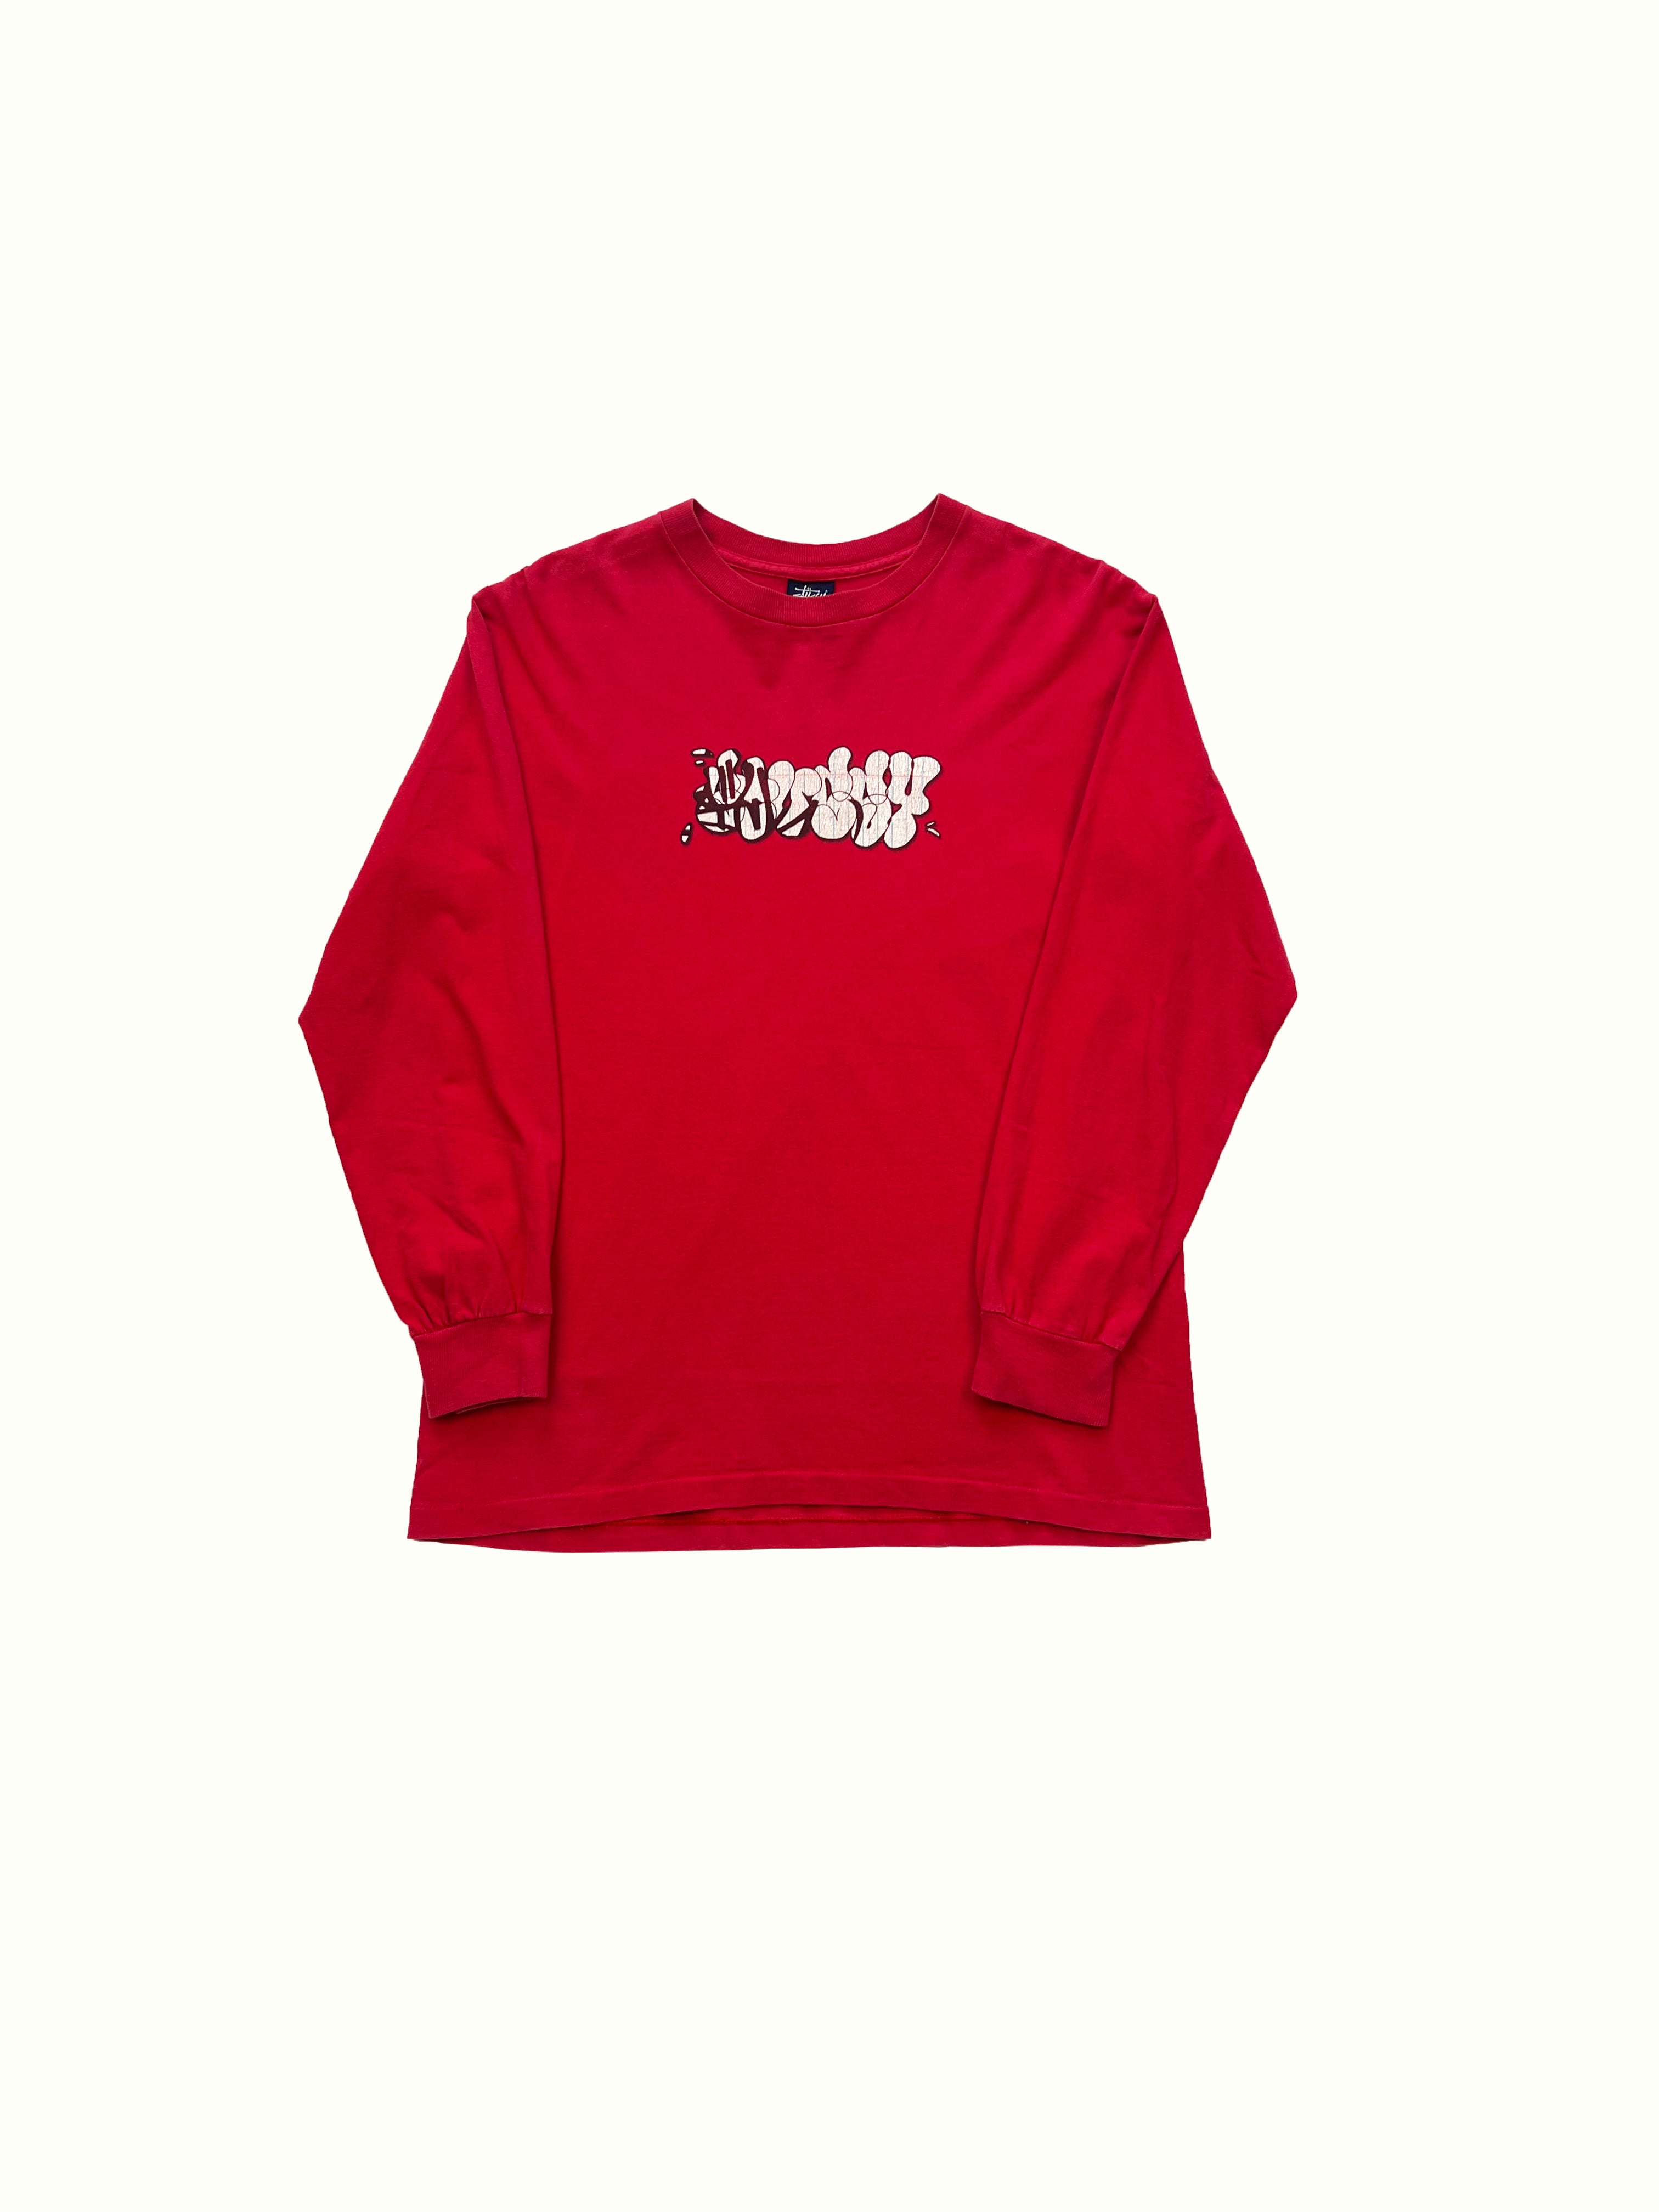 Stussy Graffiti Red Long Sleeve T-shirt 90's